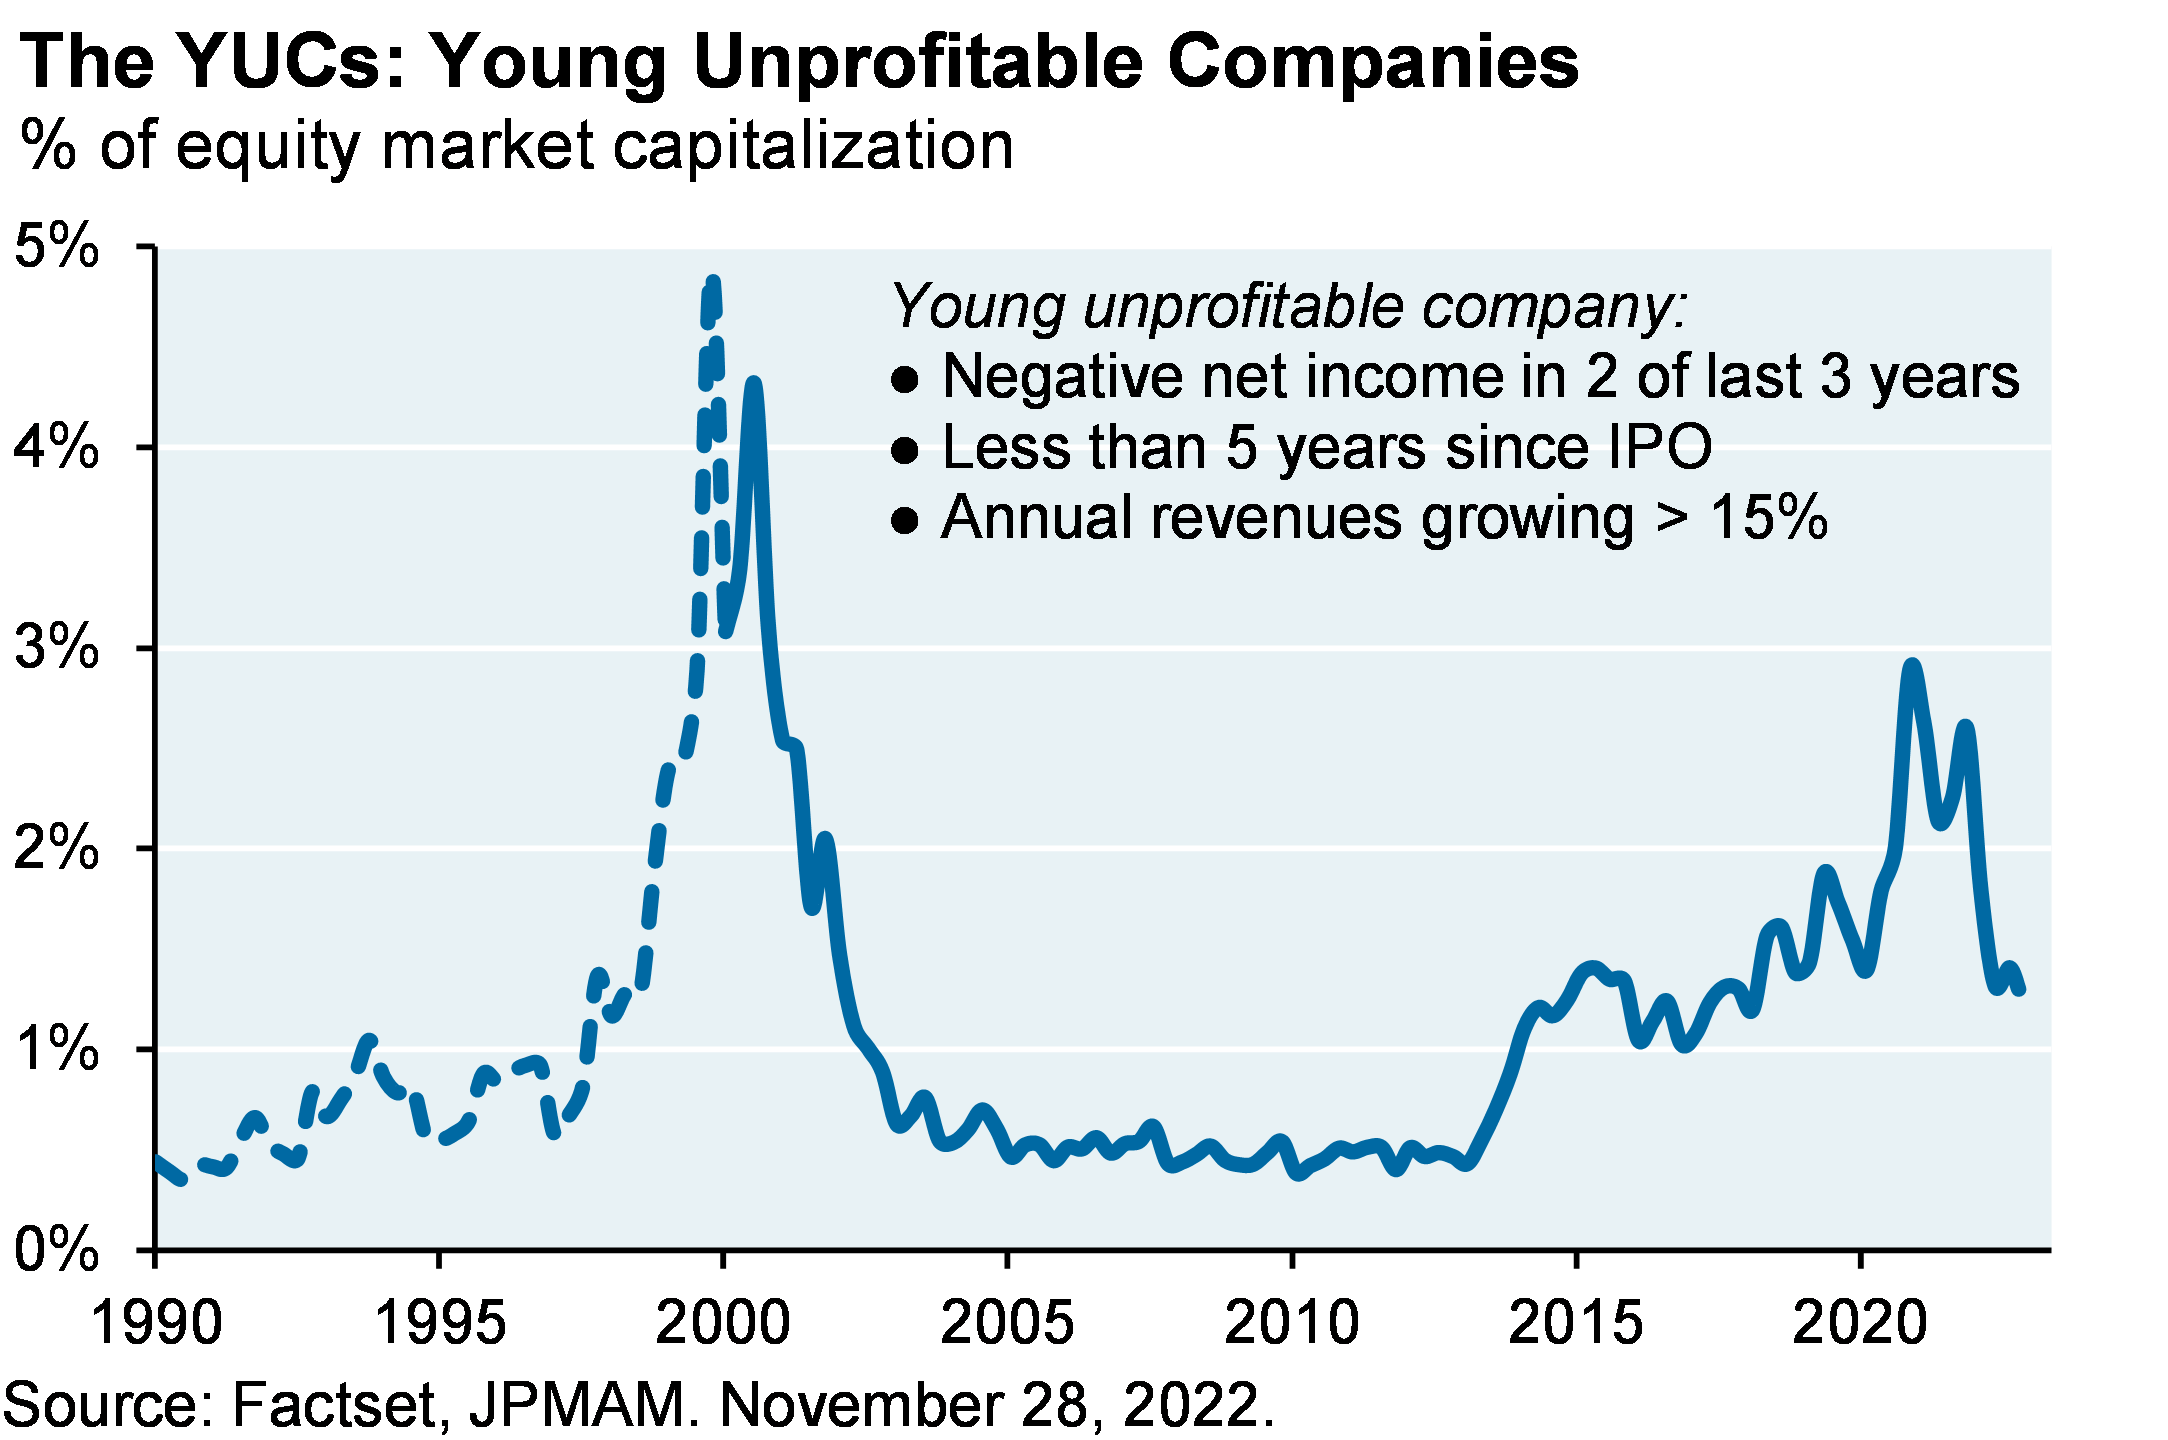 The YUCs: Young Unprofitable Companies